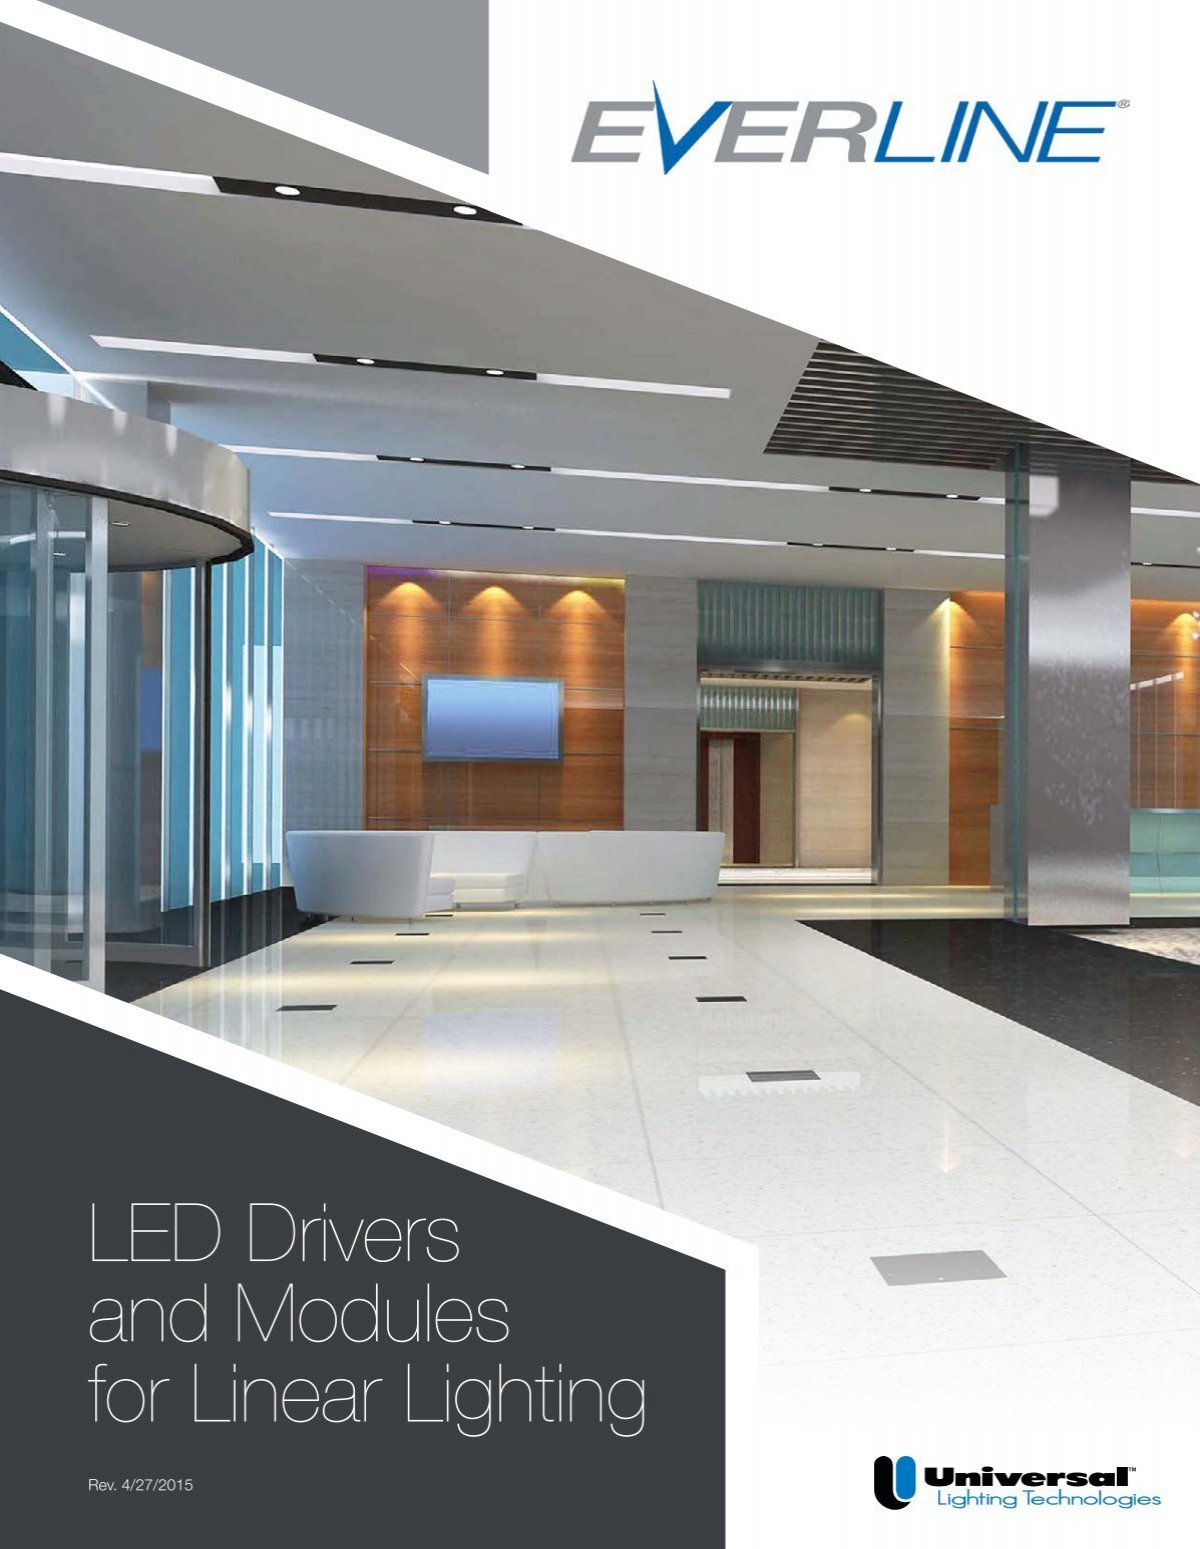 EVERLINE LED Linear Brochure - Universal Lighting Technologies